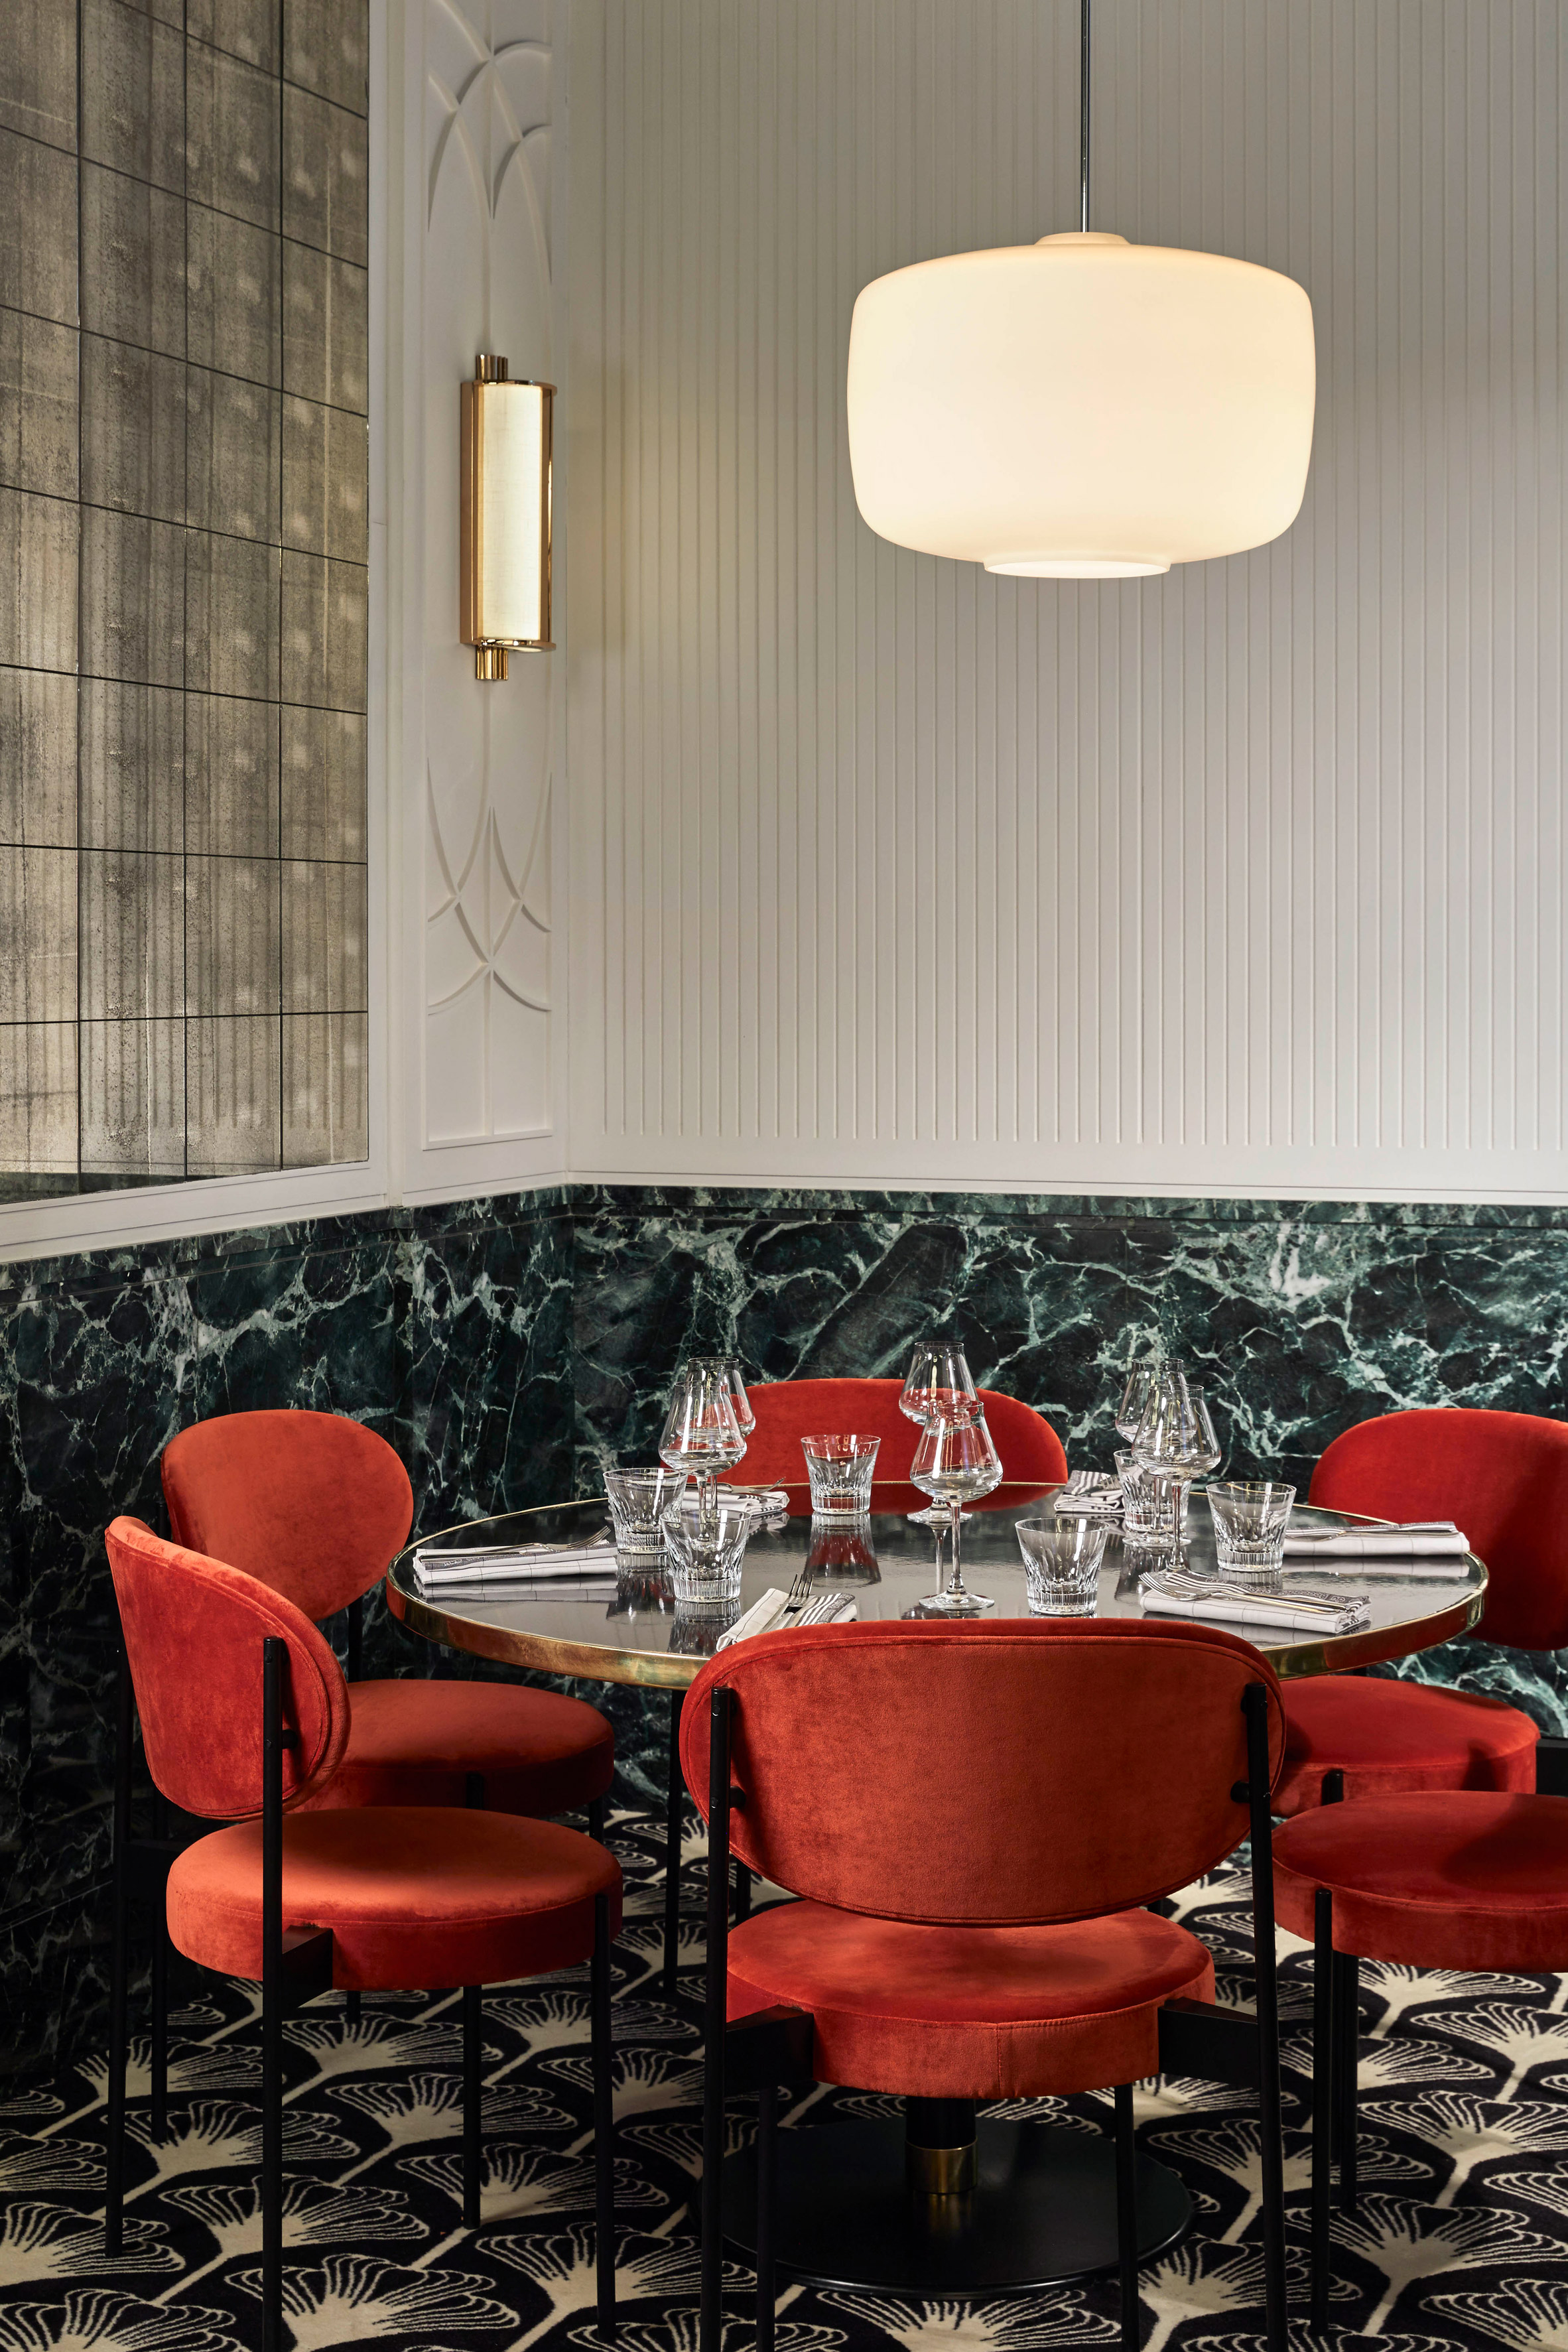 Beefbar Paris: Interiors of Beefbar restaurant in Paris, designed by Humbert & Poyet